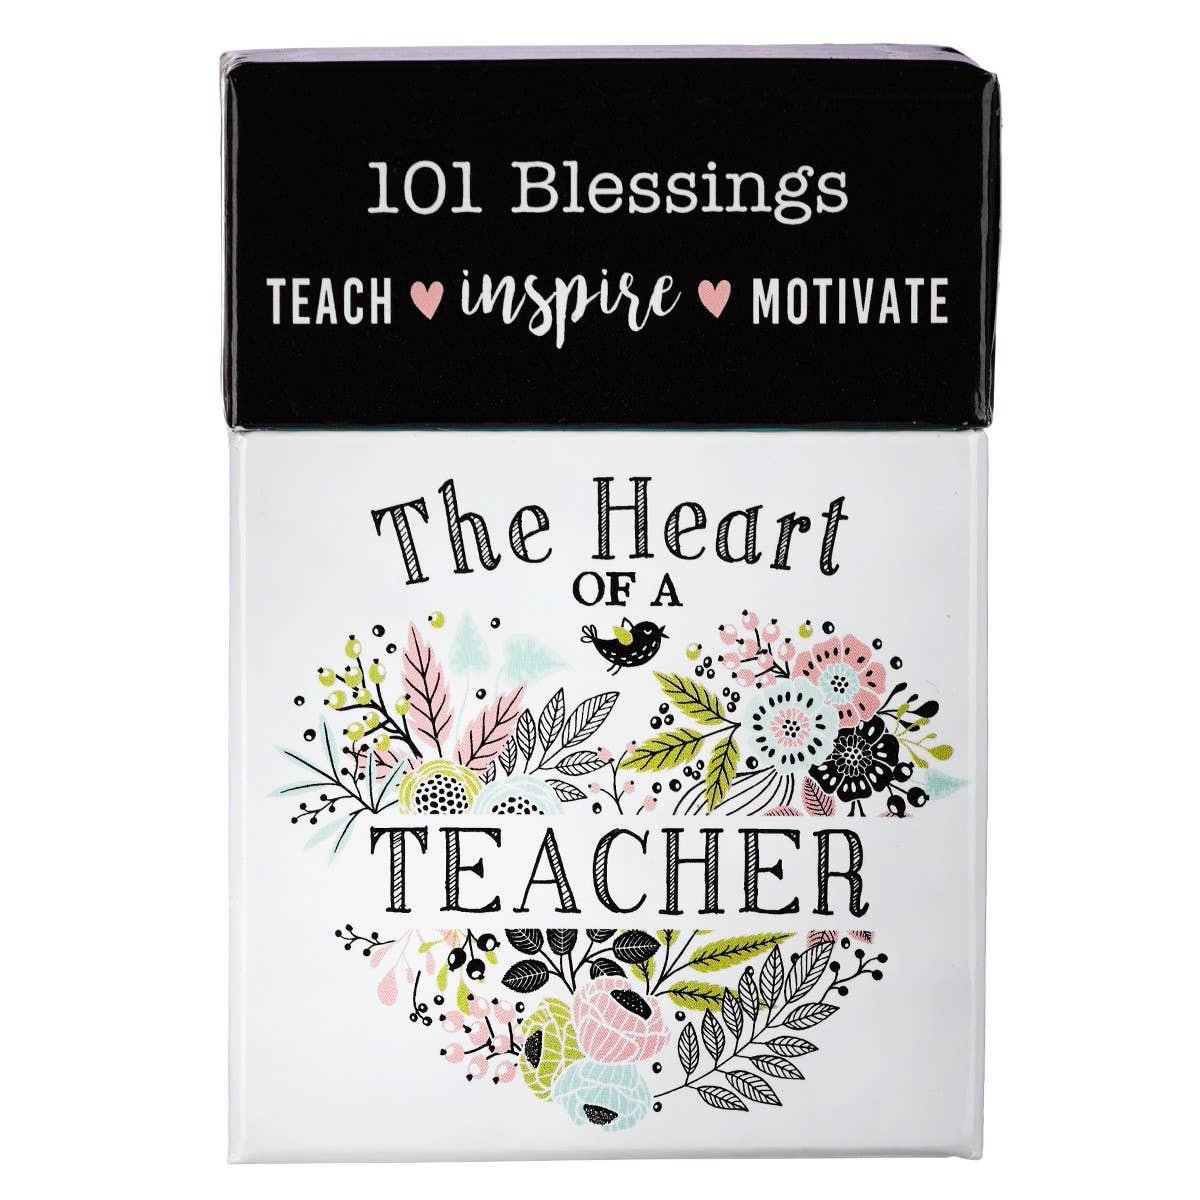 101 Blessings The Heart of a Teacher Box of Blessings